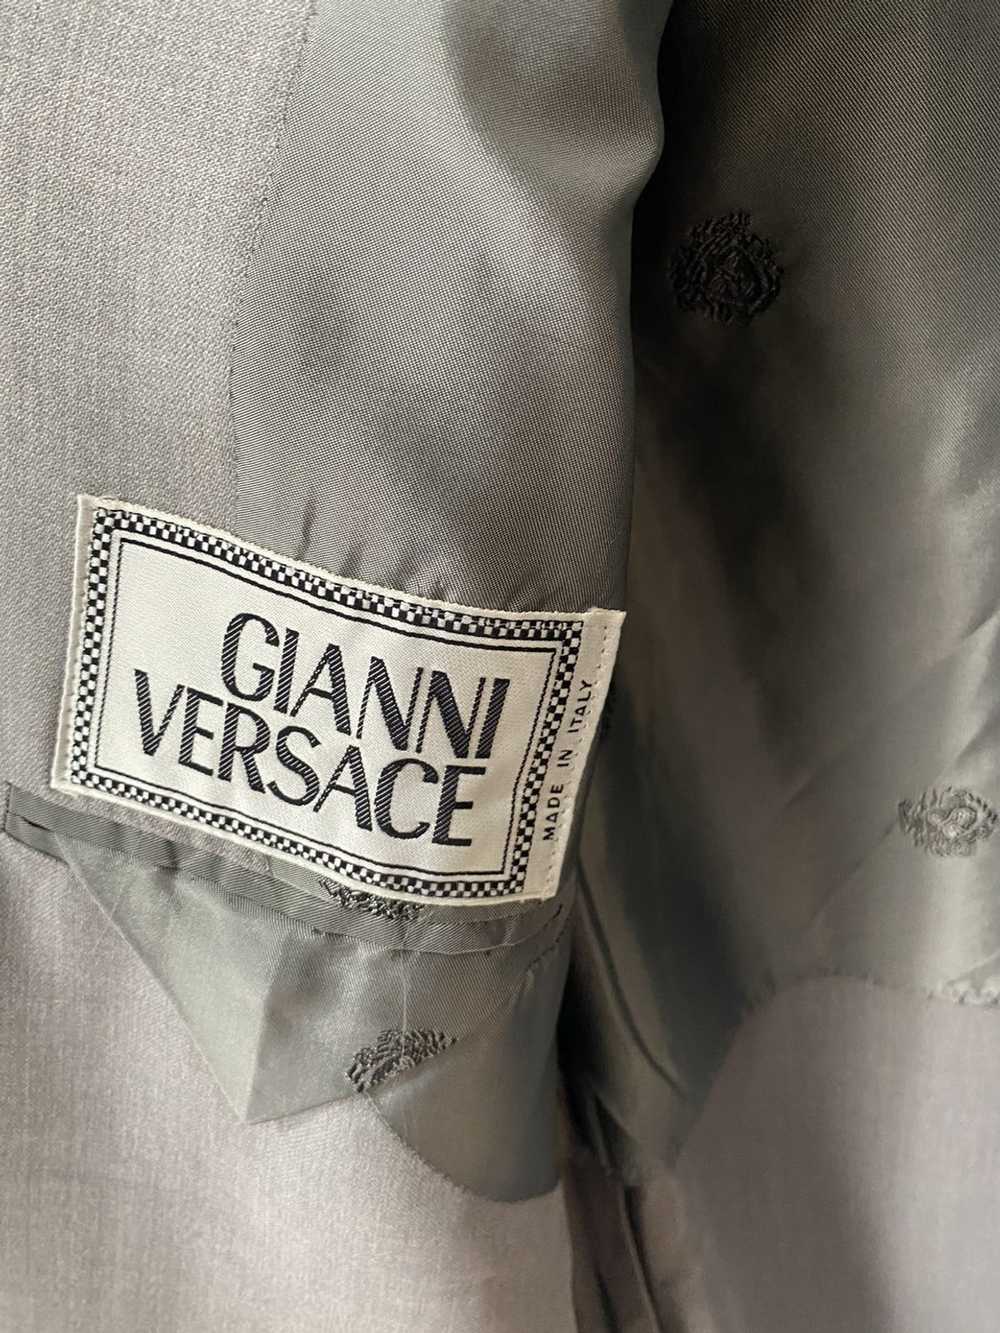 Versace Gianni Versace Grey Silk Jacket Late 80s/… - image 4